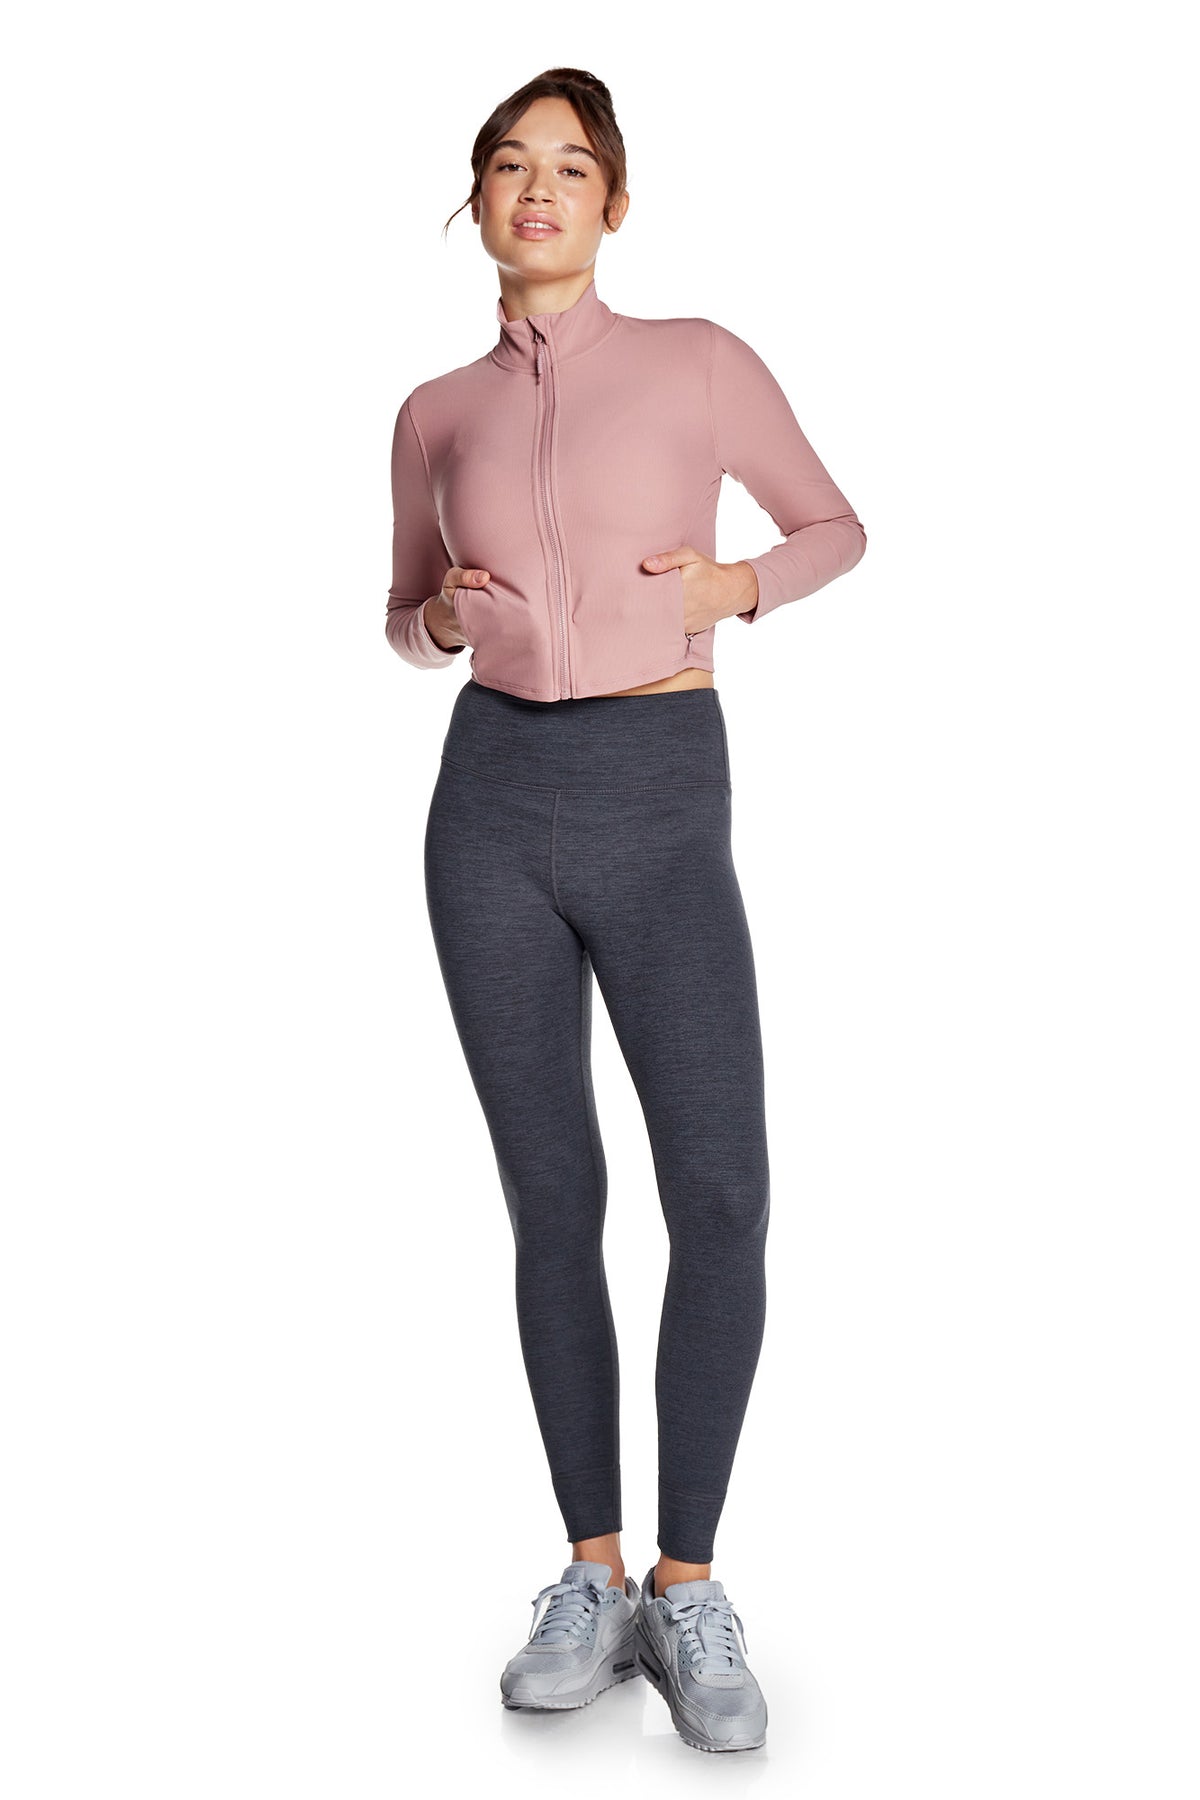 Kyodan Utility Fleece-Lined High Waist Leggings Black X-Small at   Women's Clothing store